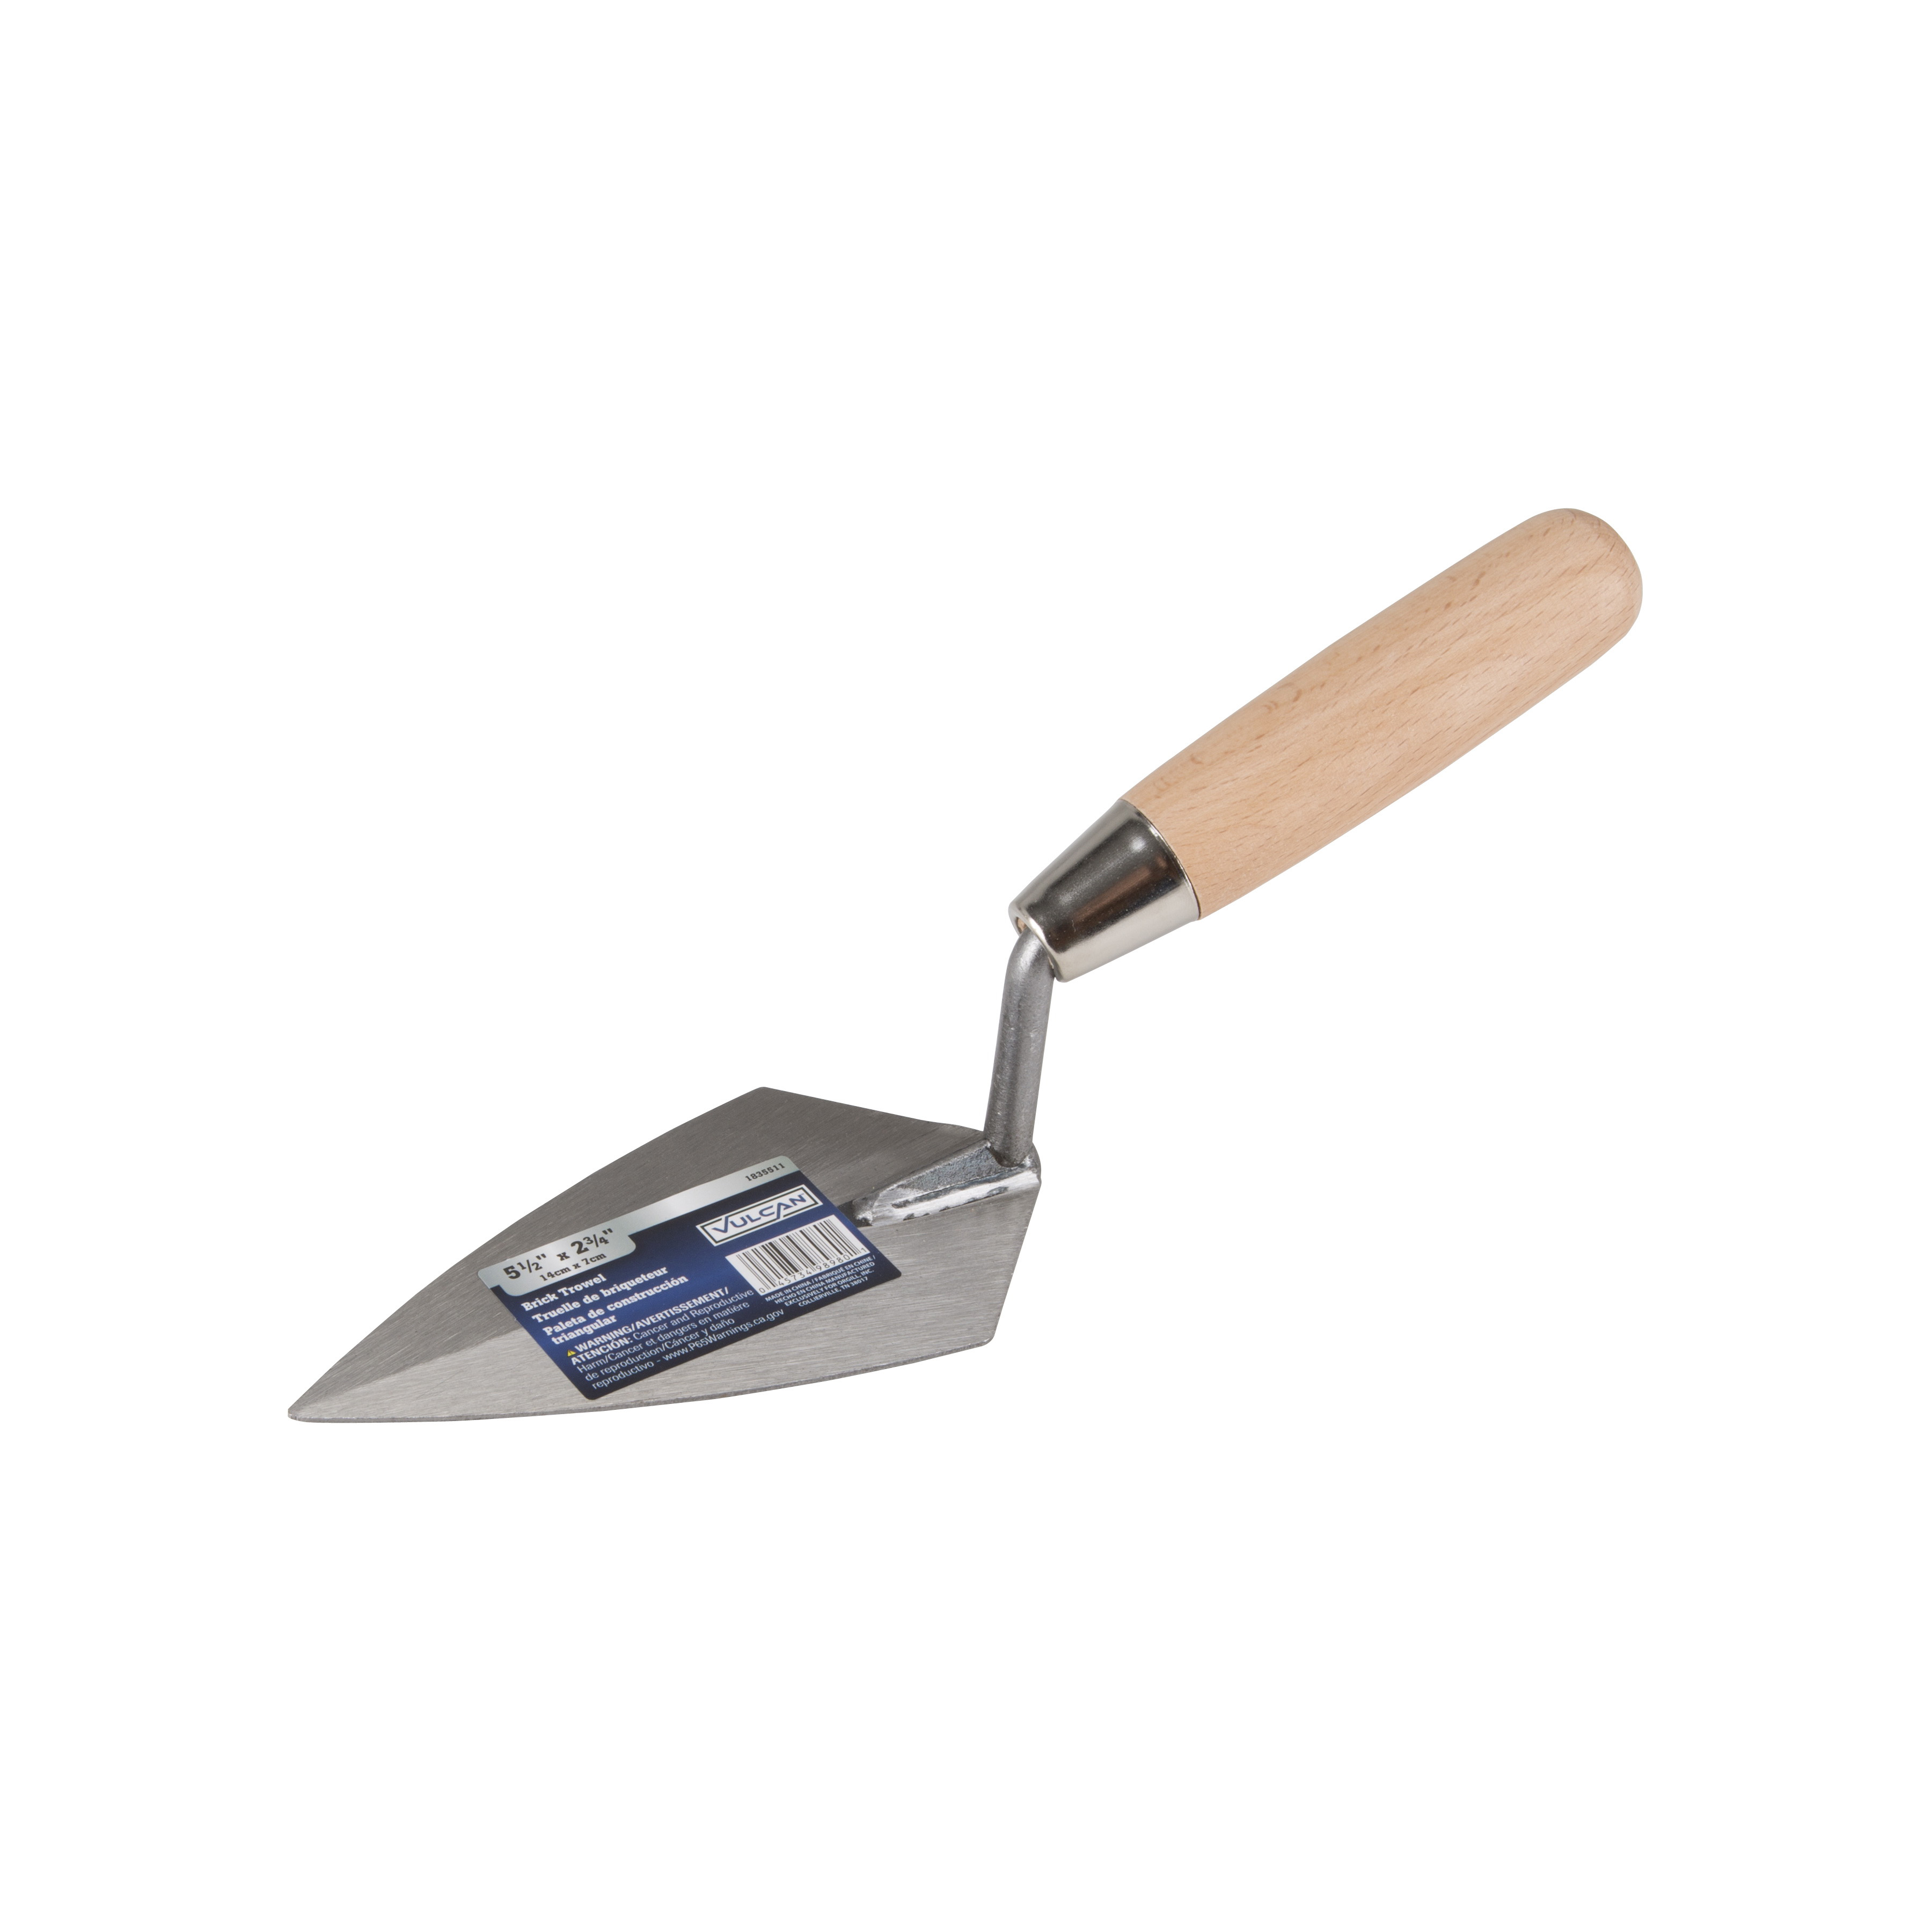 DYT71223L Brick Trowel, 5.5 in L Blade, 2.75 in W Blade, Steel Blade, Ergonomic Handle